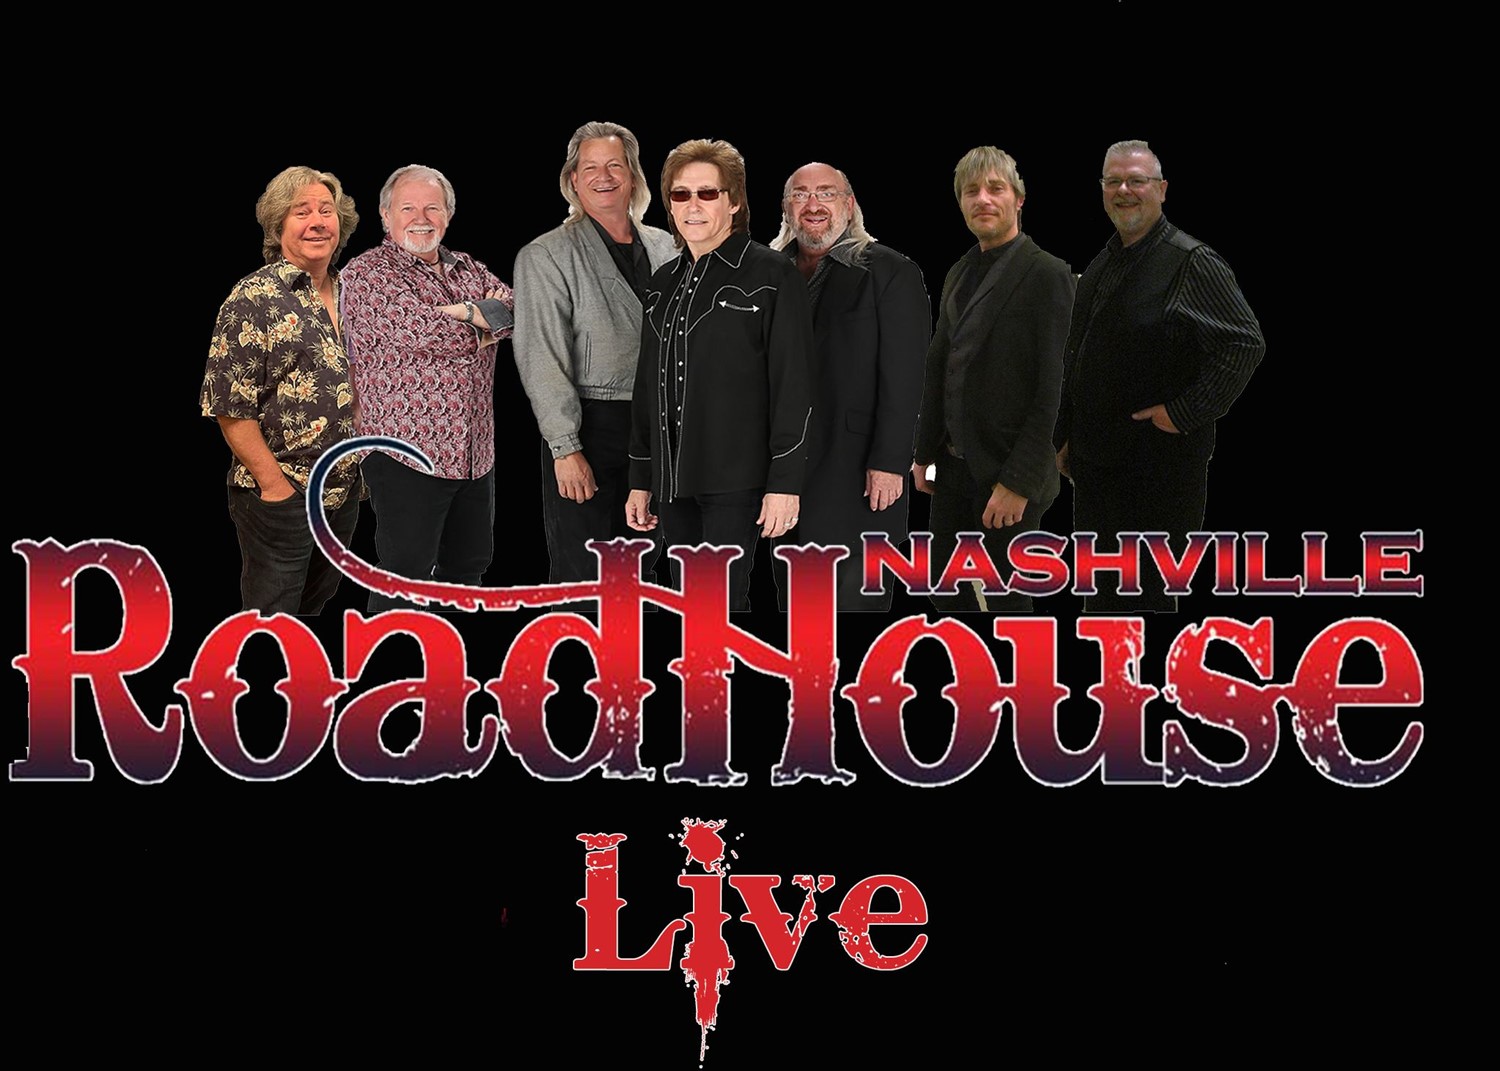 Nashville Roadhouse Live  on Dec 17, 00:00@Pierce Arrow Theater - Pick a seat, Buy tickets and Get information on nashvilleroadhouse.com bransonstartheater